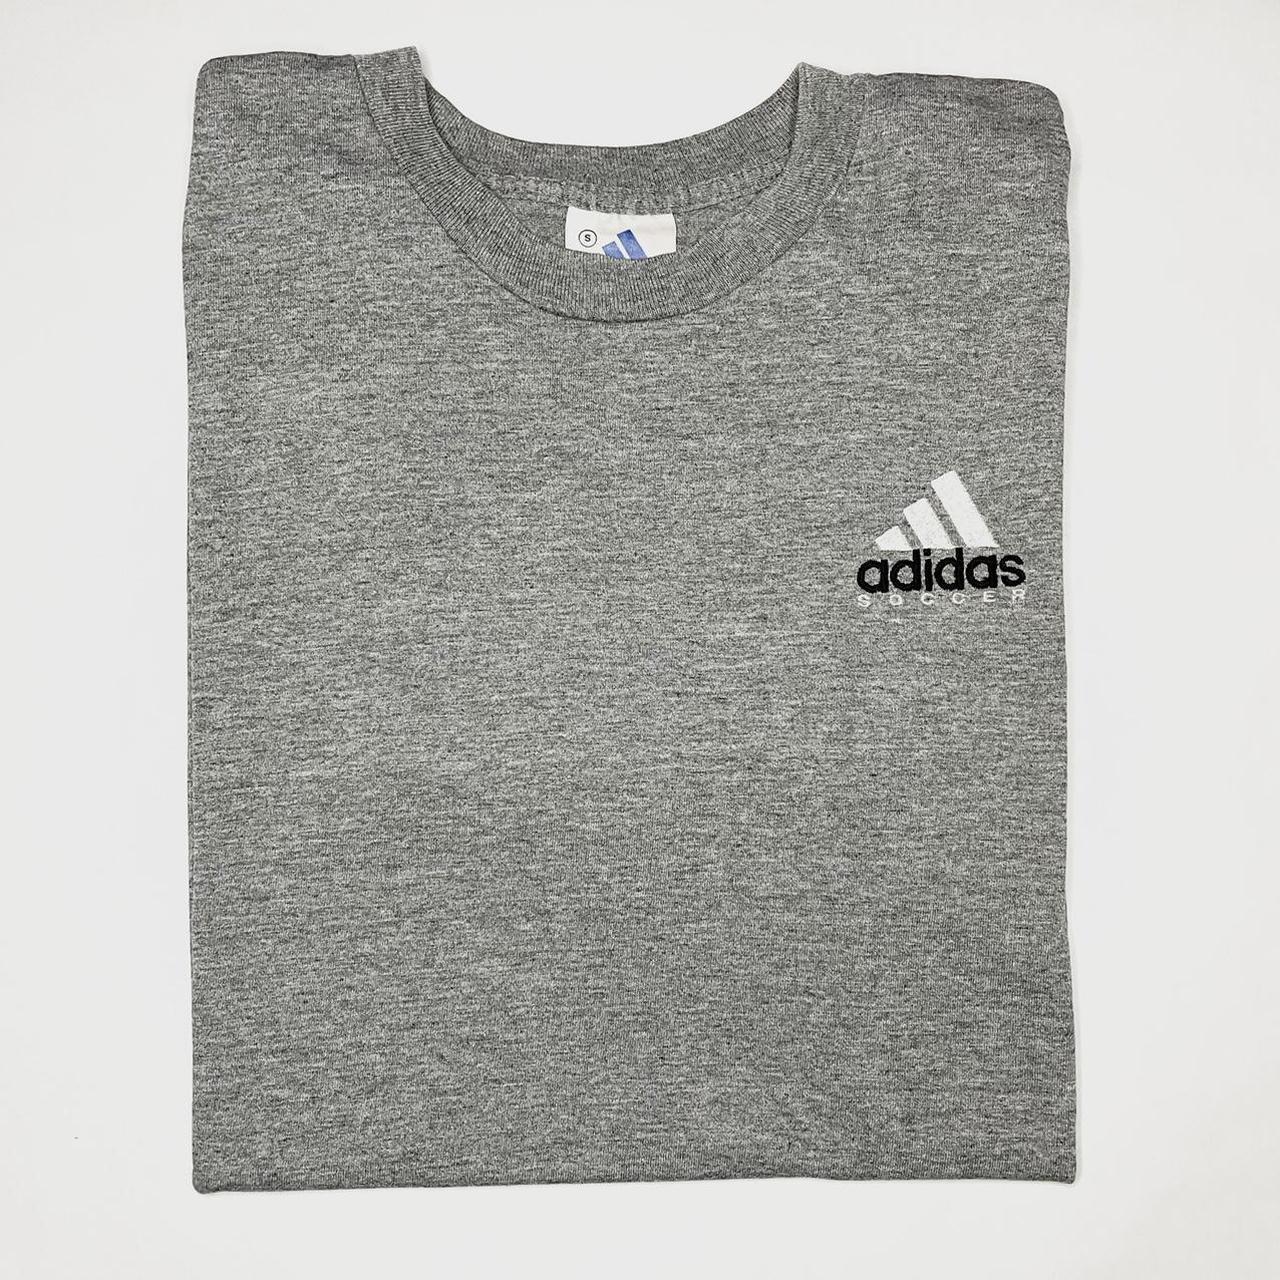 Lodge aanwijzing Condenseren Adidas Men's Grey and White T-shirt | Depop